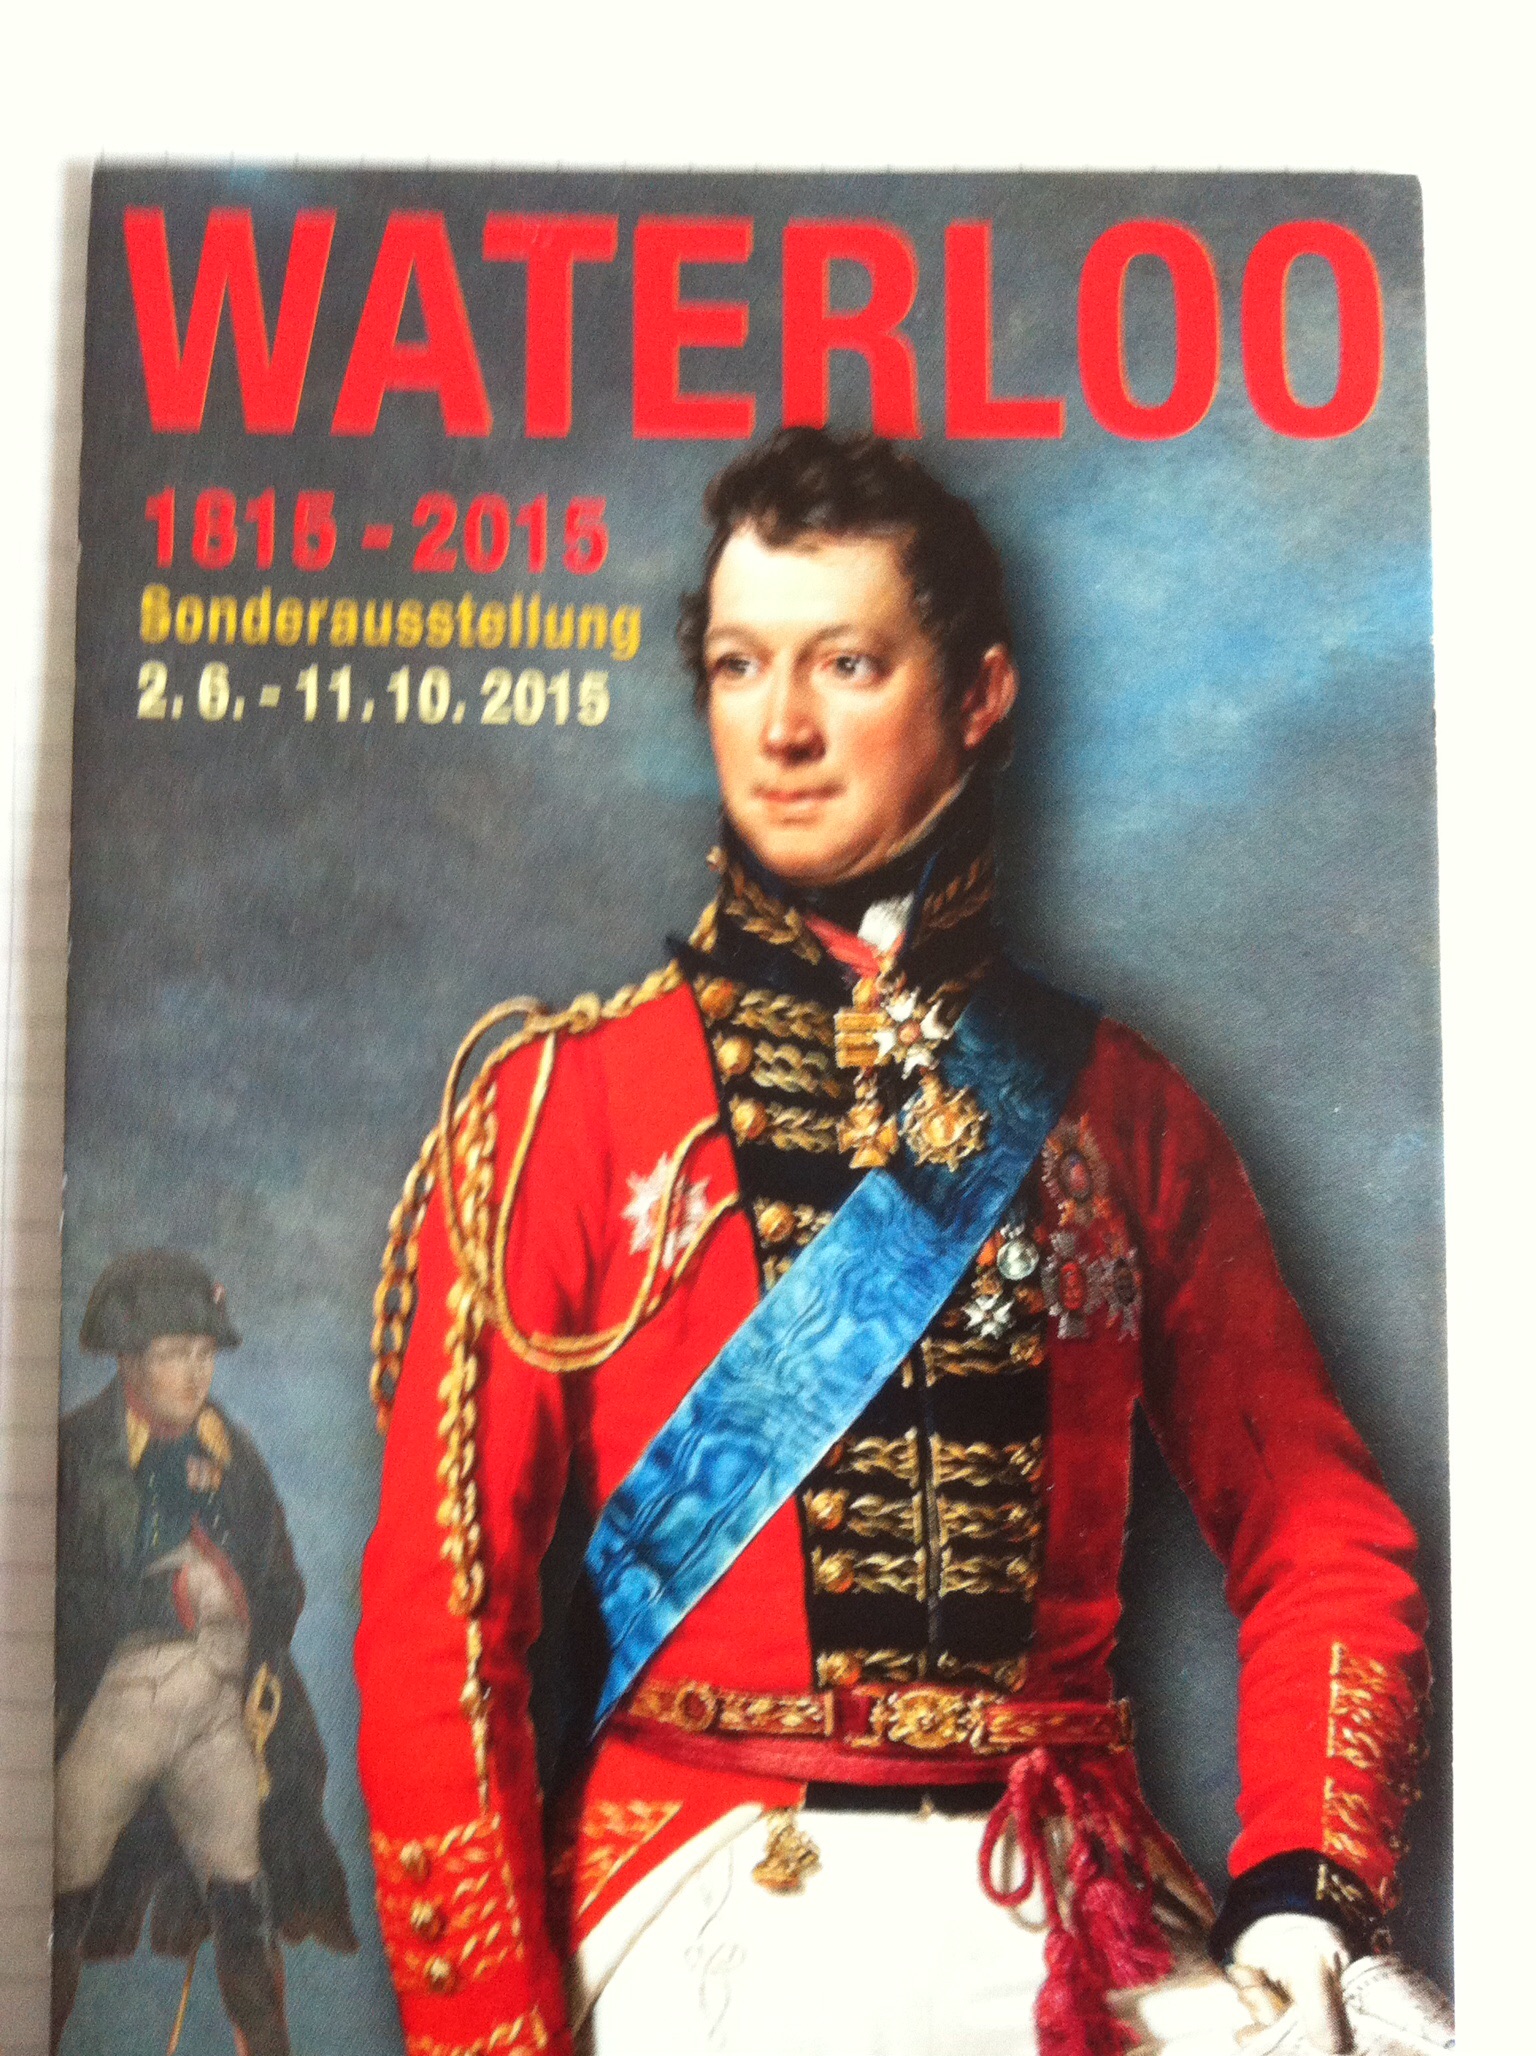 SONDERAUSSTELLUNG
Waterloo